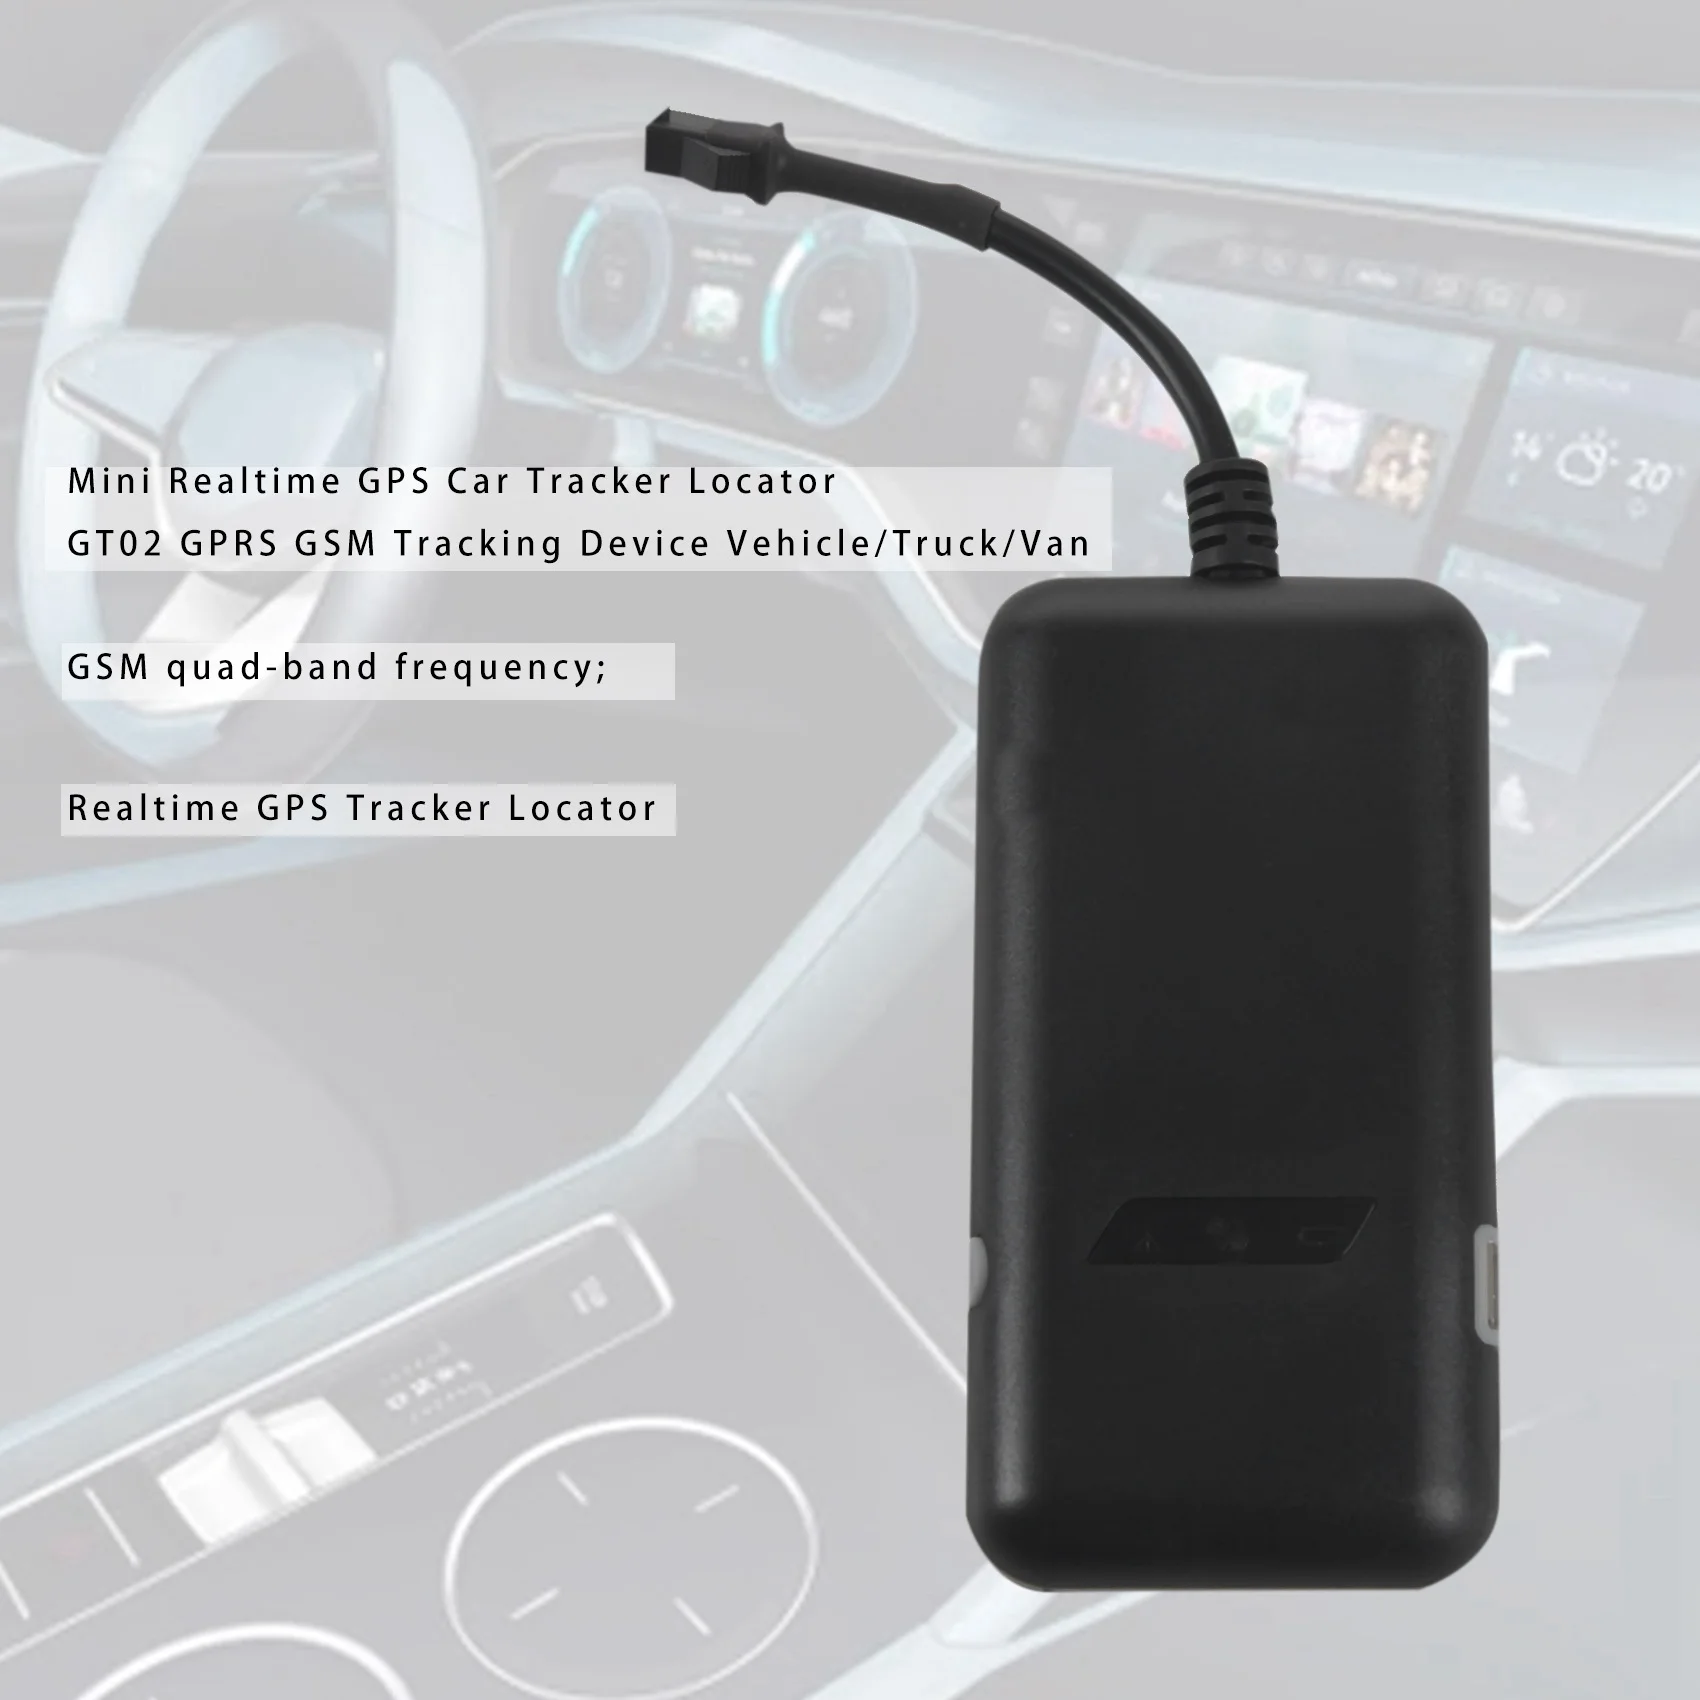 

Mini Realtime GPS Car Tracker Locator GT02 GPRS GSM Tracking Device Vehicle/Truck/Van